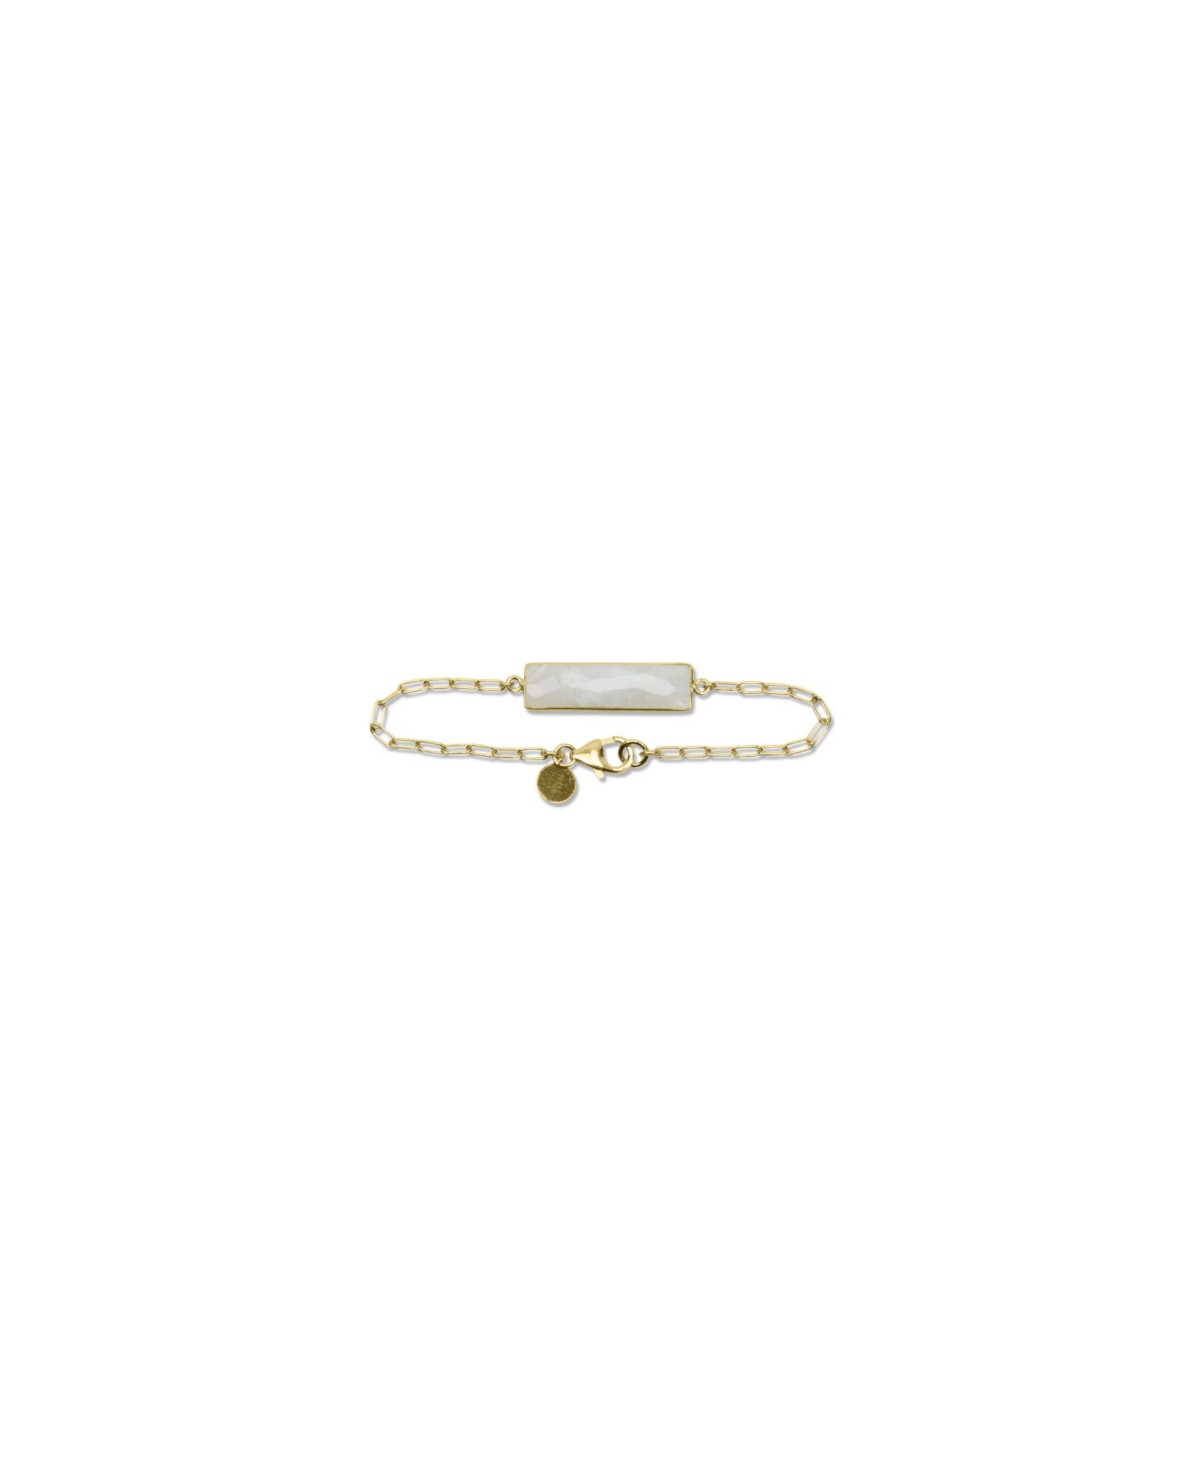 Bezel Set Moonstone Bar Bracelet with 14K Gold Fill Chain - Gold - Fill